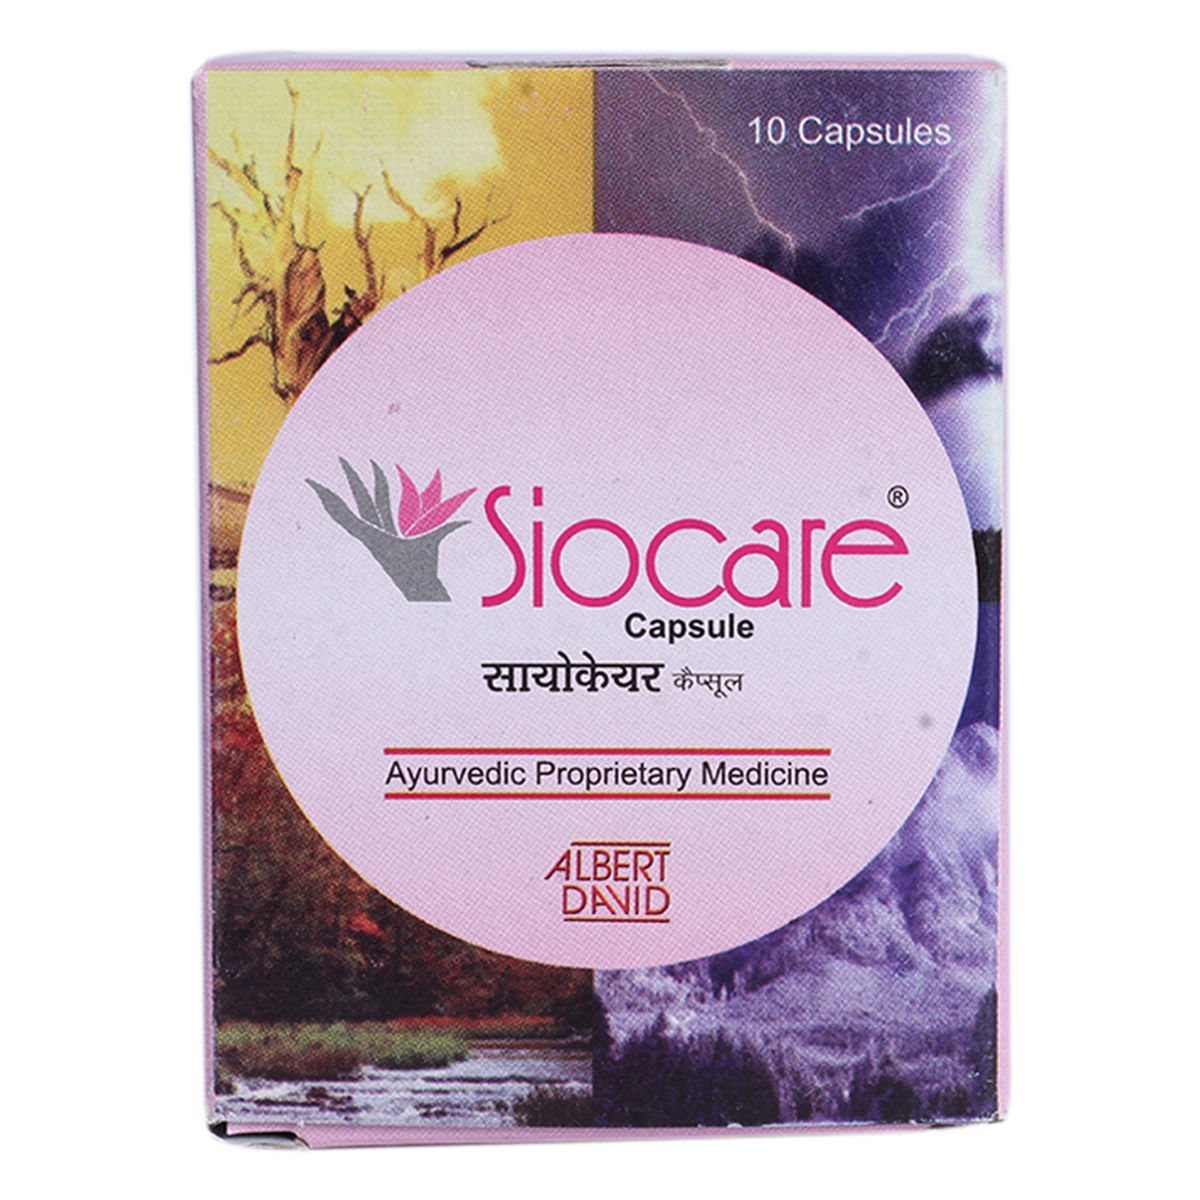 Buy Siocare Capsule, 10 Capsules Online